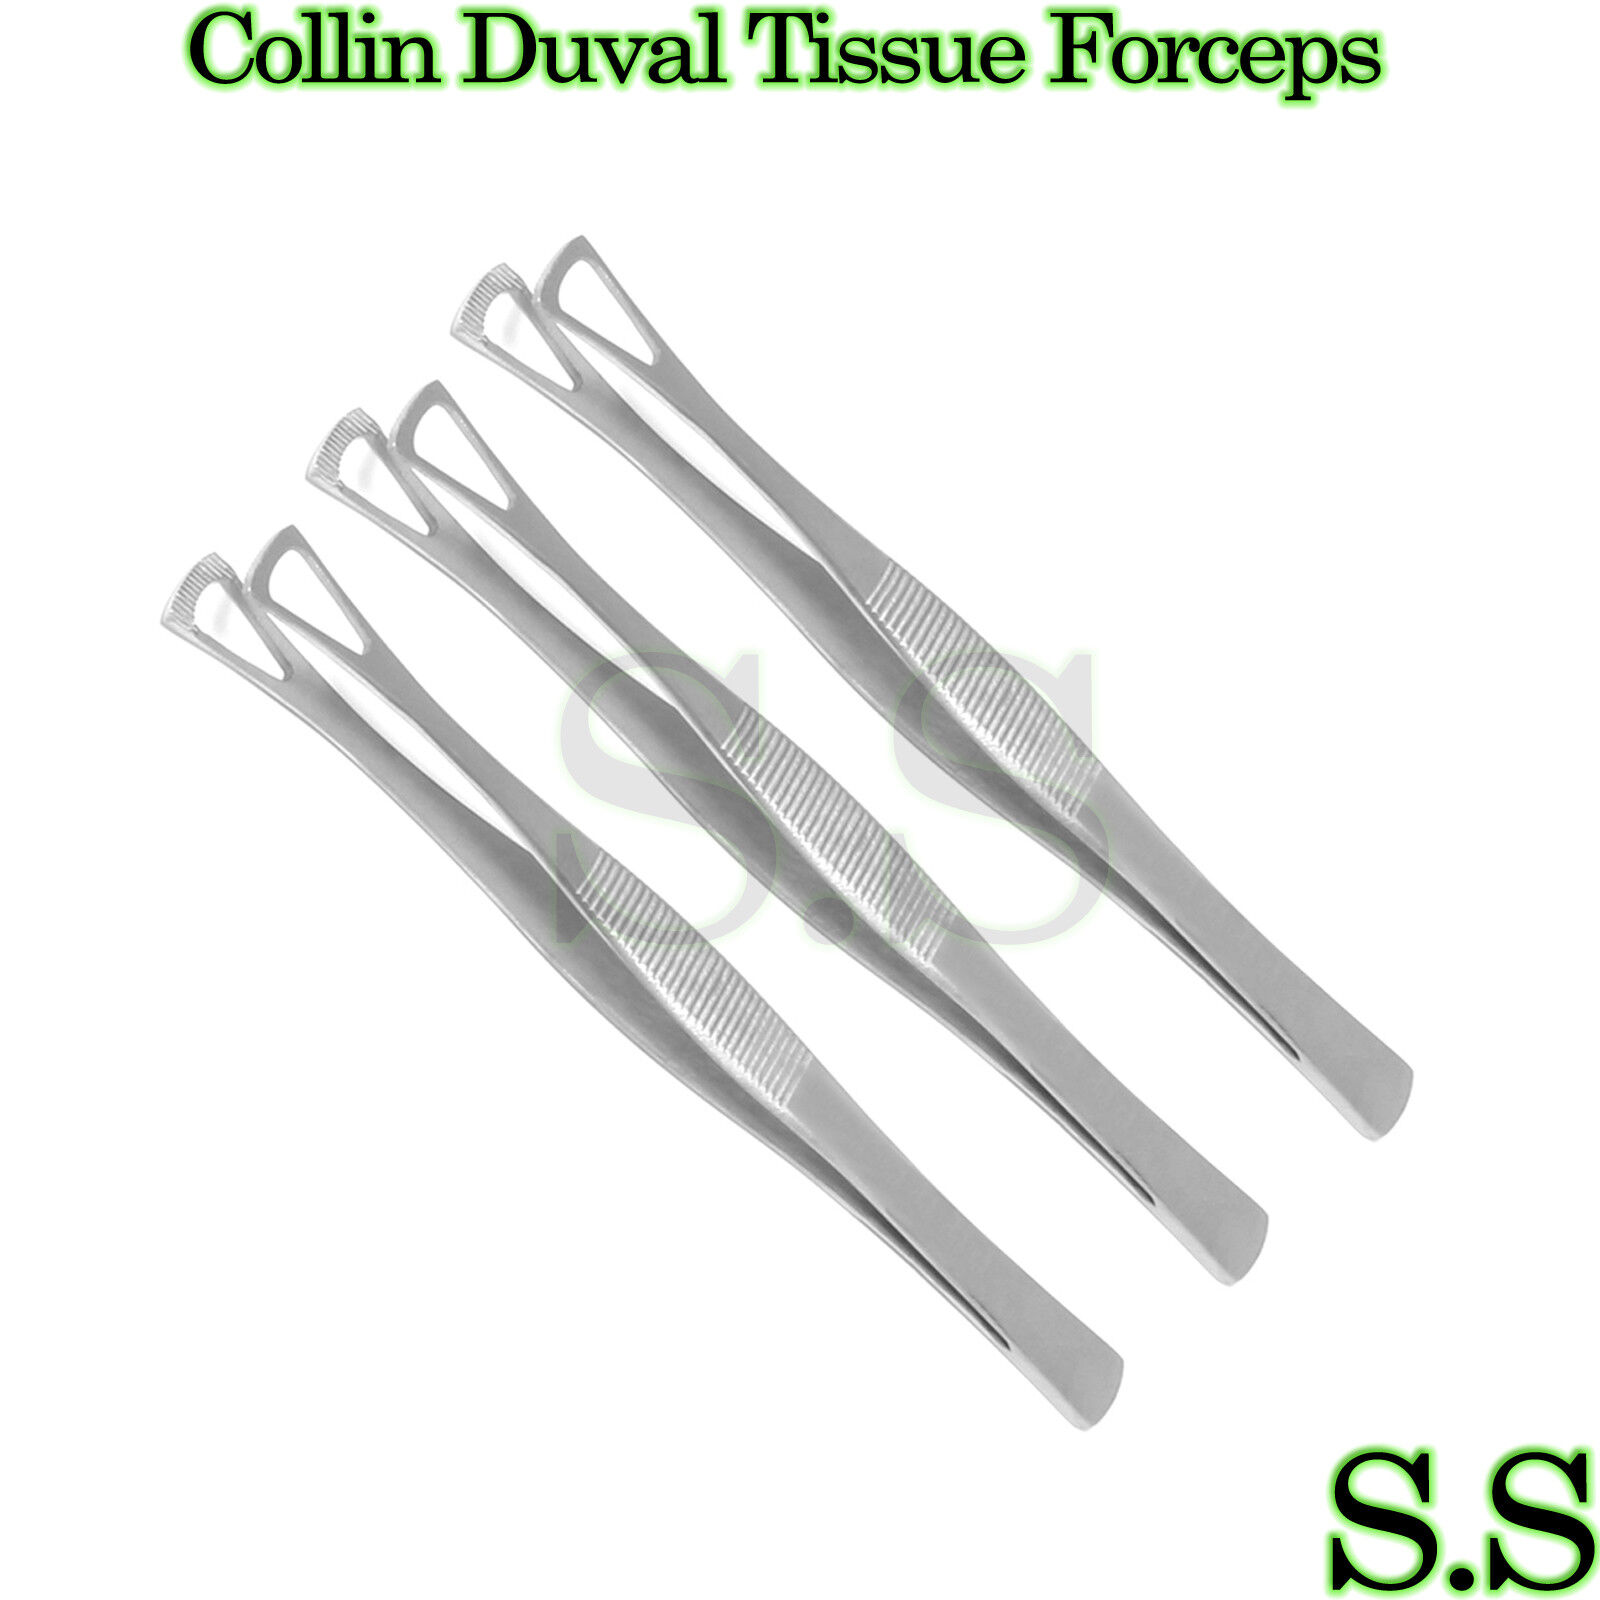 3 Collin Duval Tissue Forceps instruments Piercing Bargain Body depot